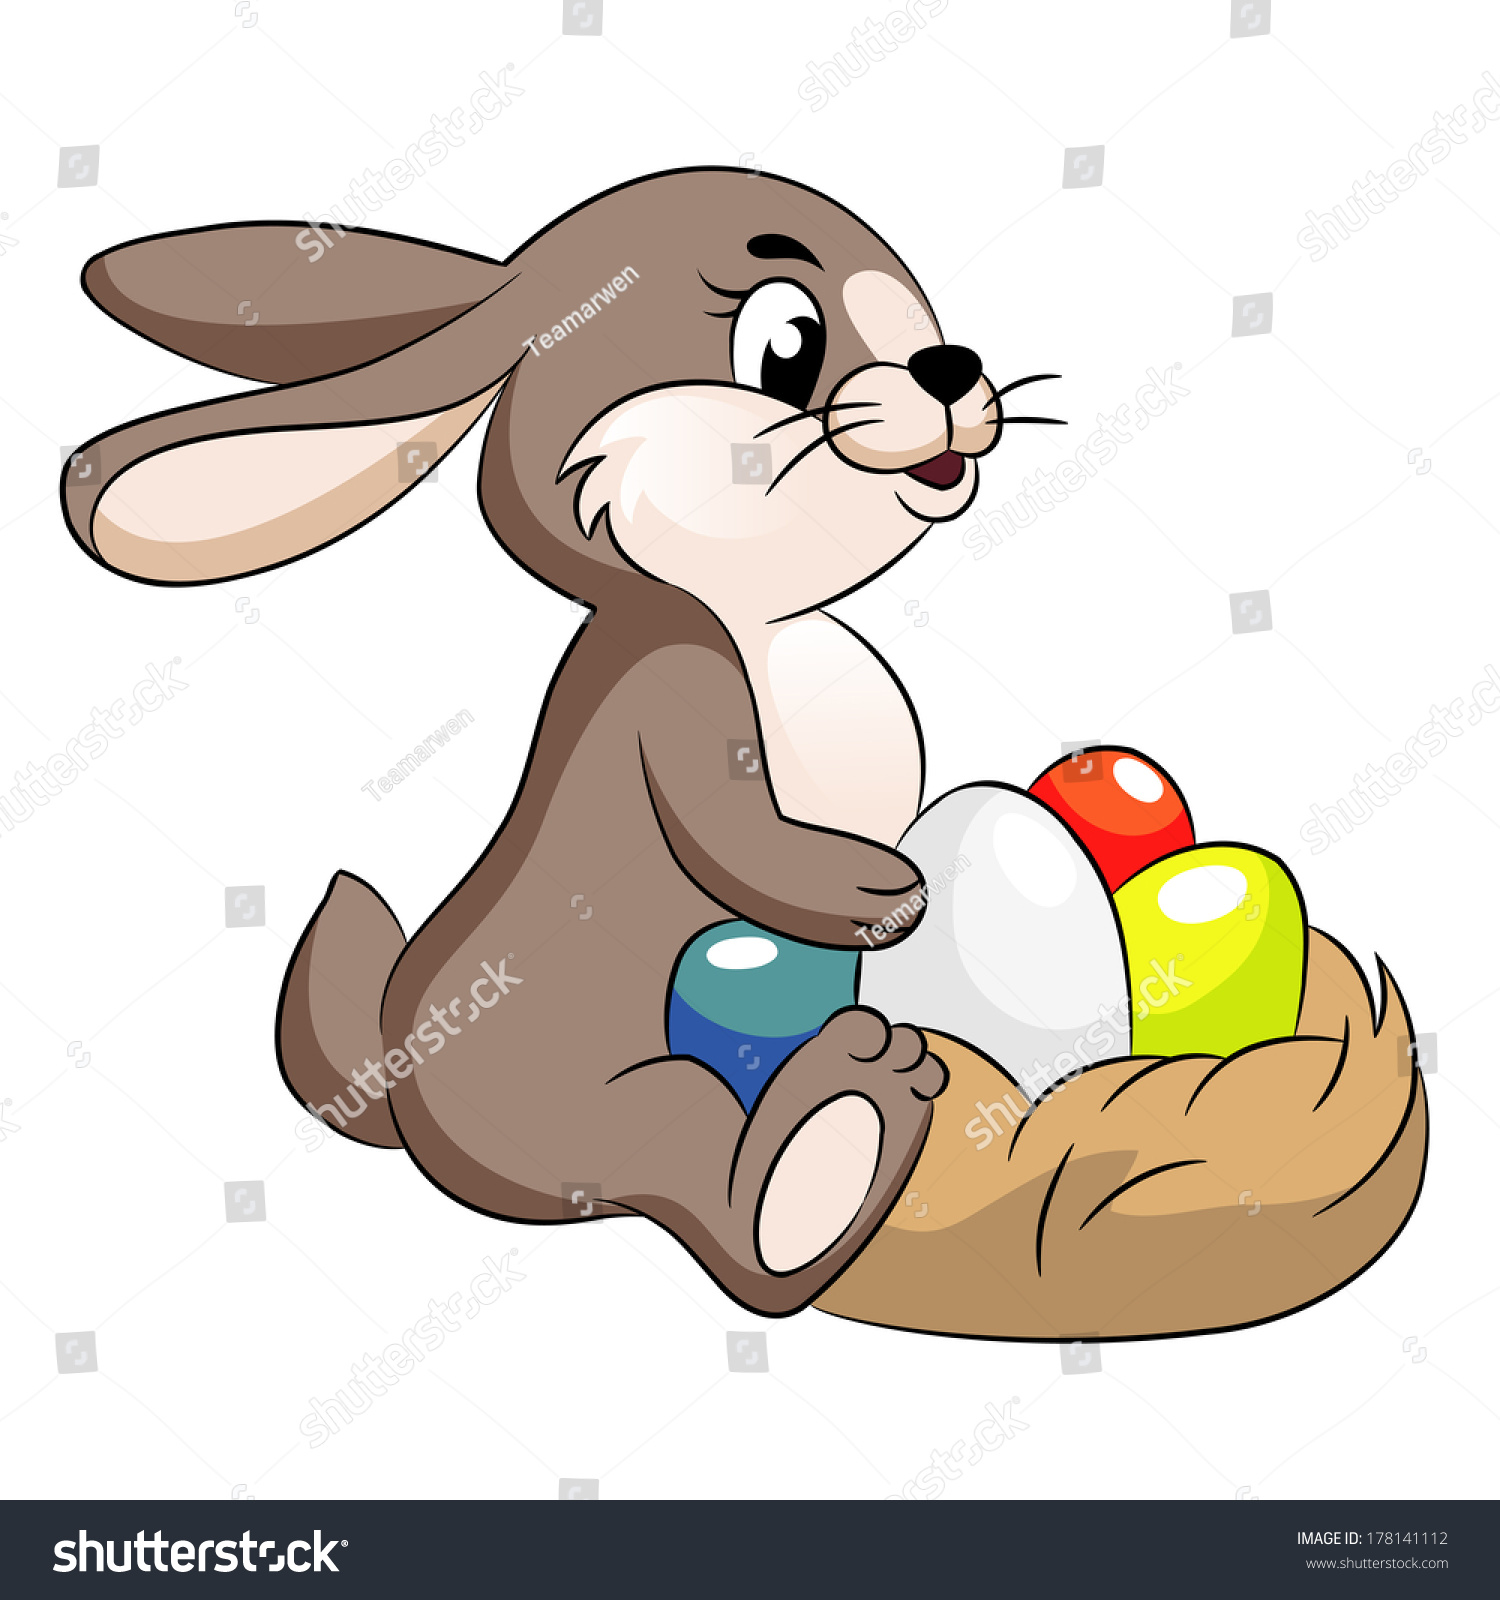 Vector Cute Easter Bunny Illustration - 178141112 : Shutterstock